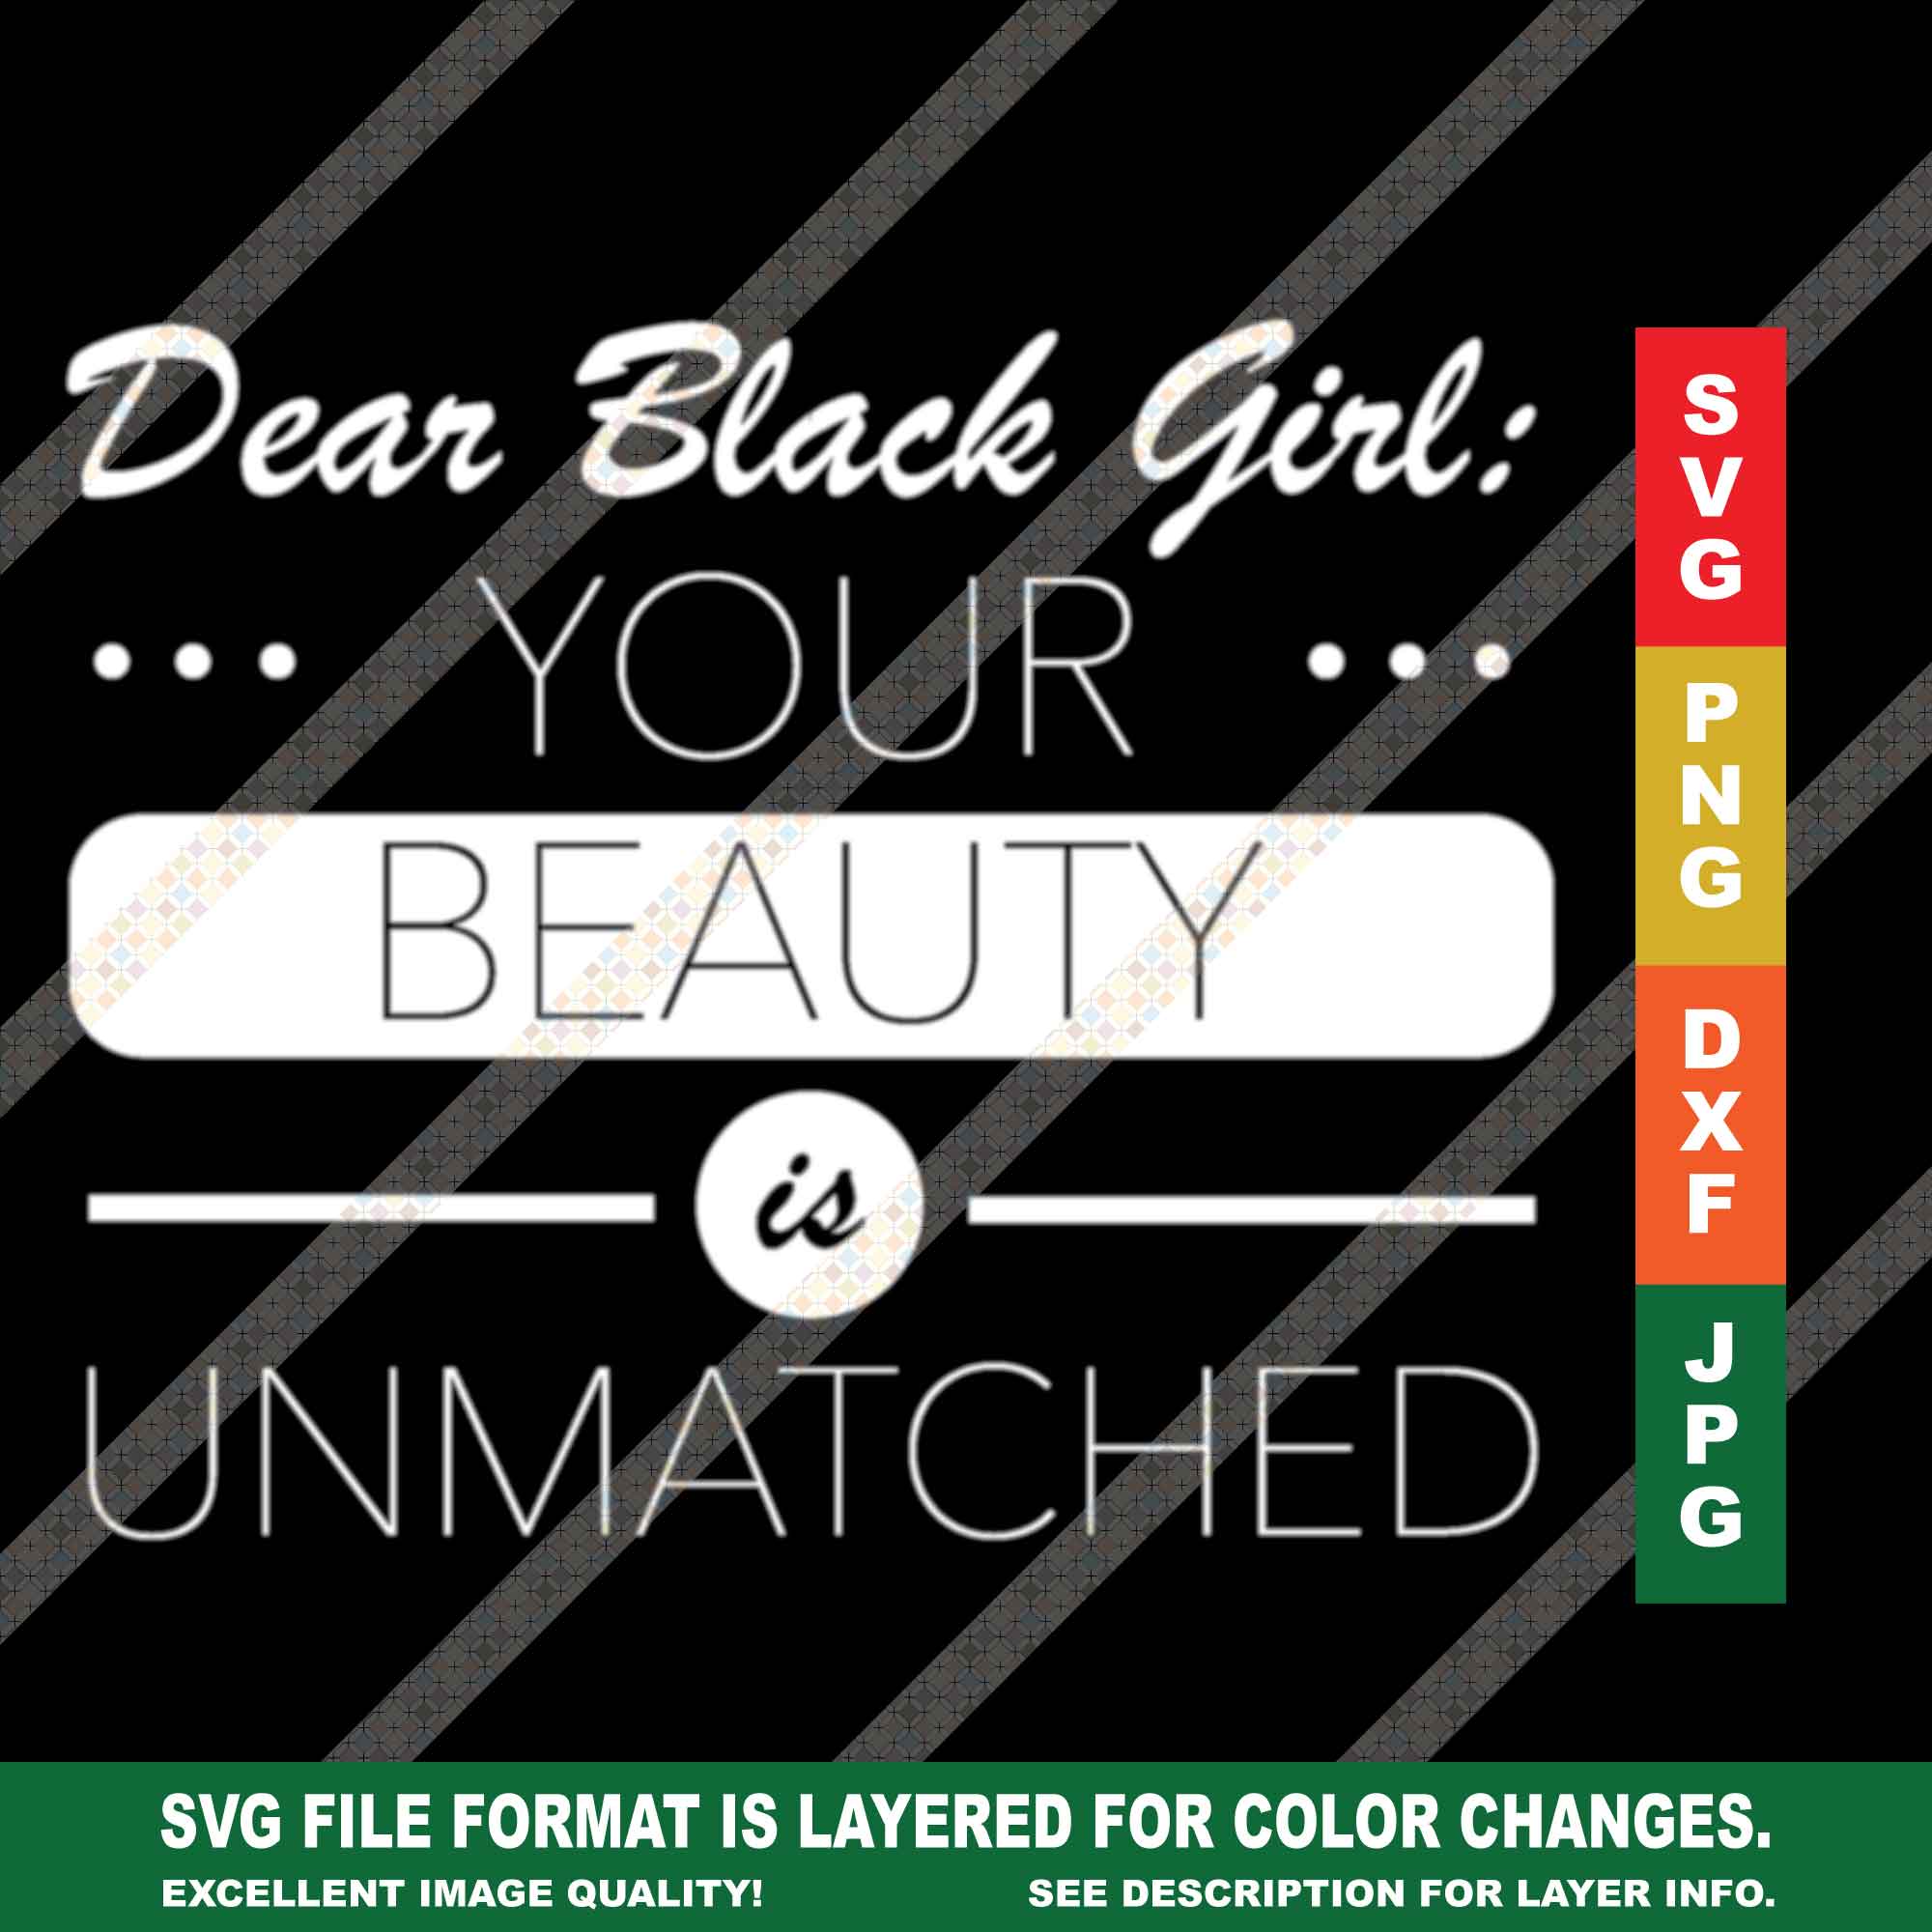 Dear Black Girl African American SVG